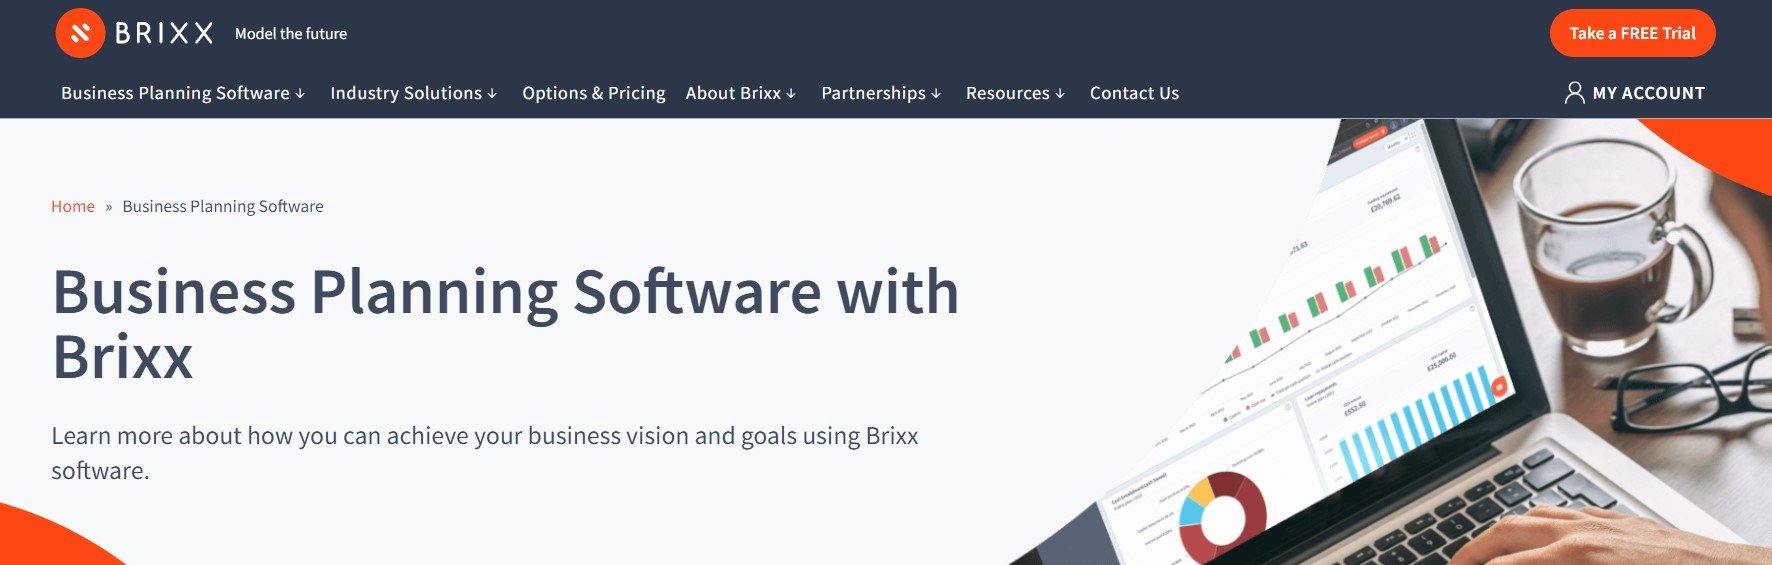 Brixx Business Planning Software